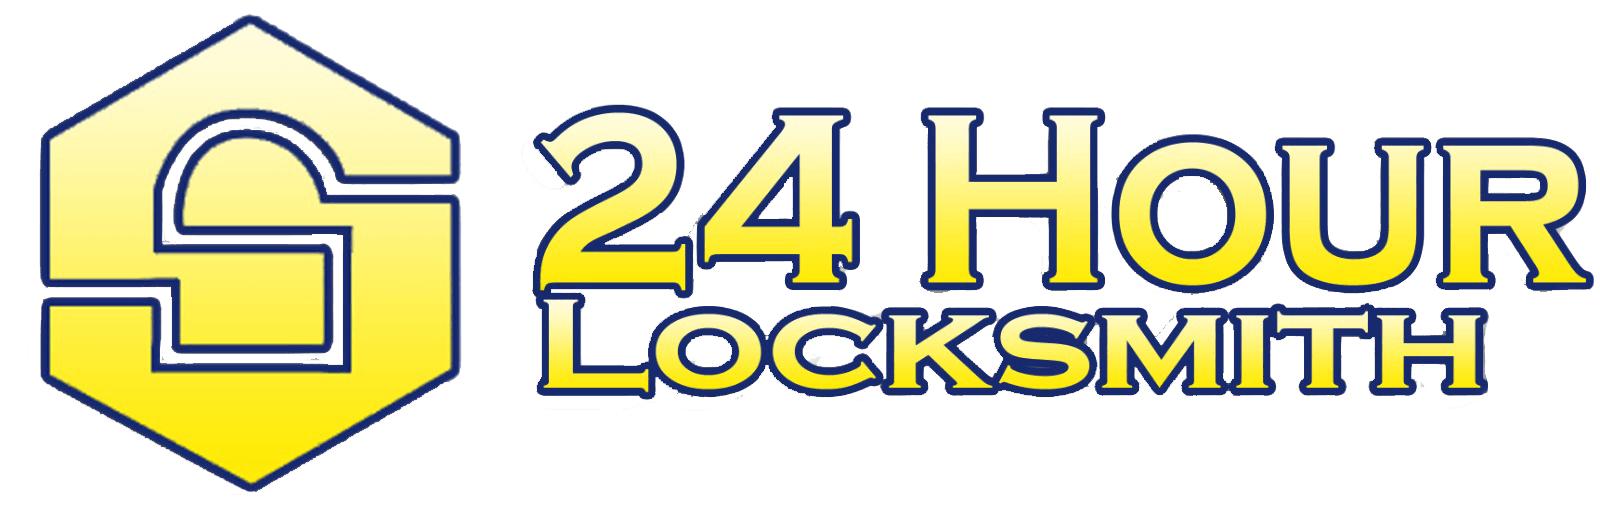 24 Hour Locksmith in Oakland, CA